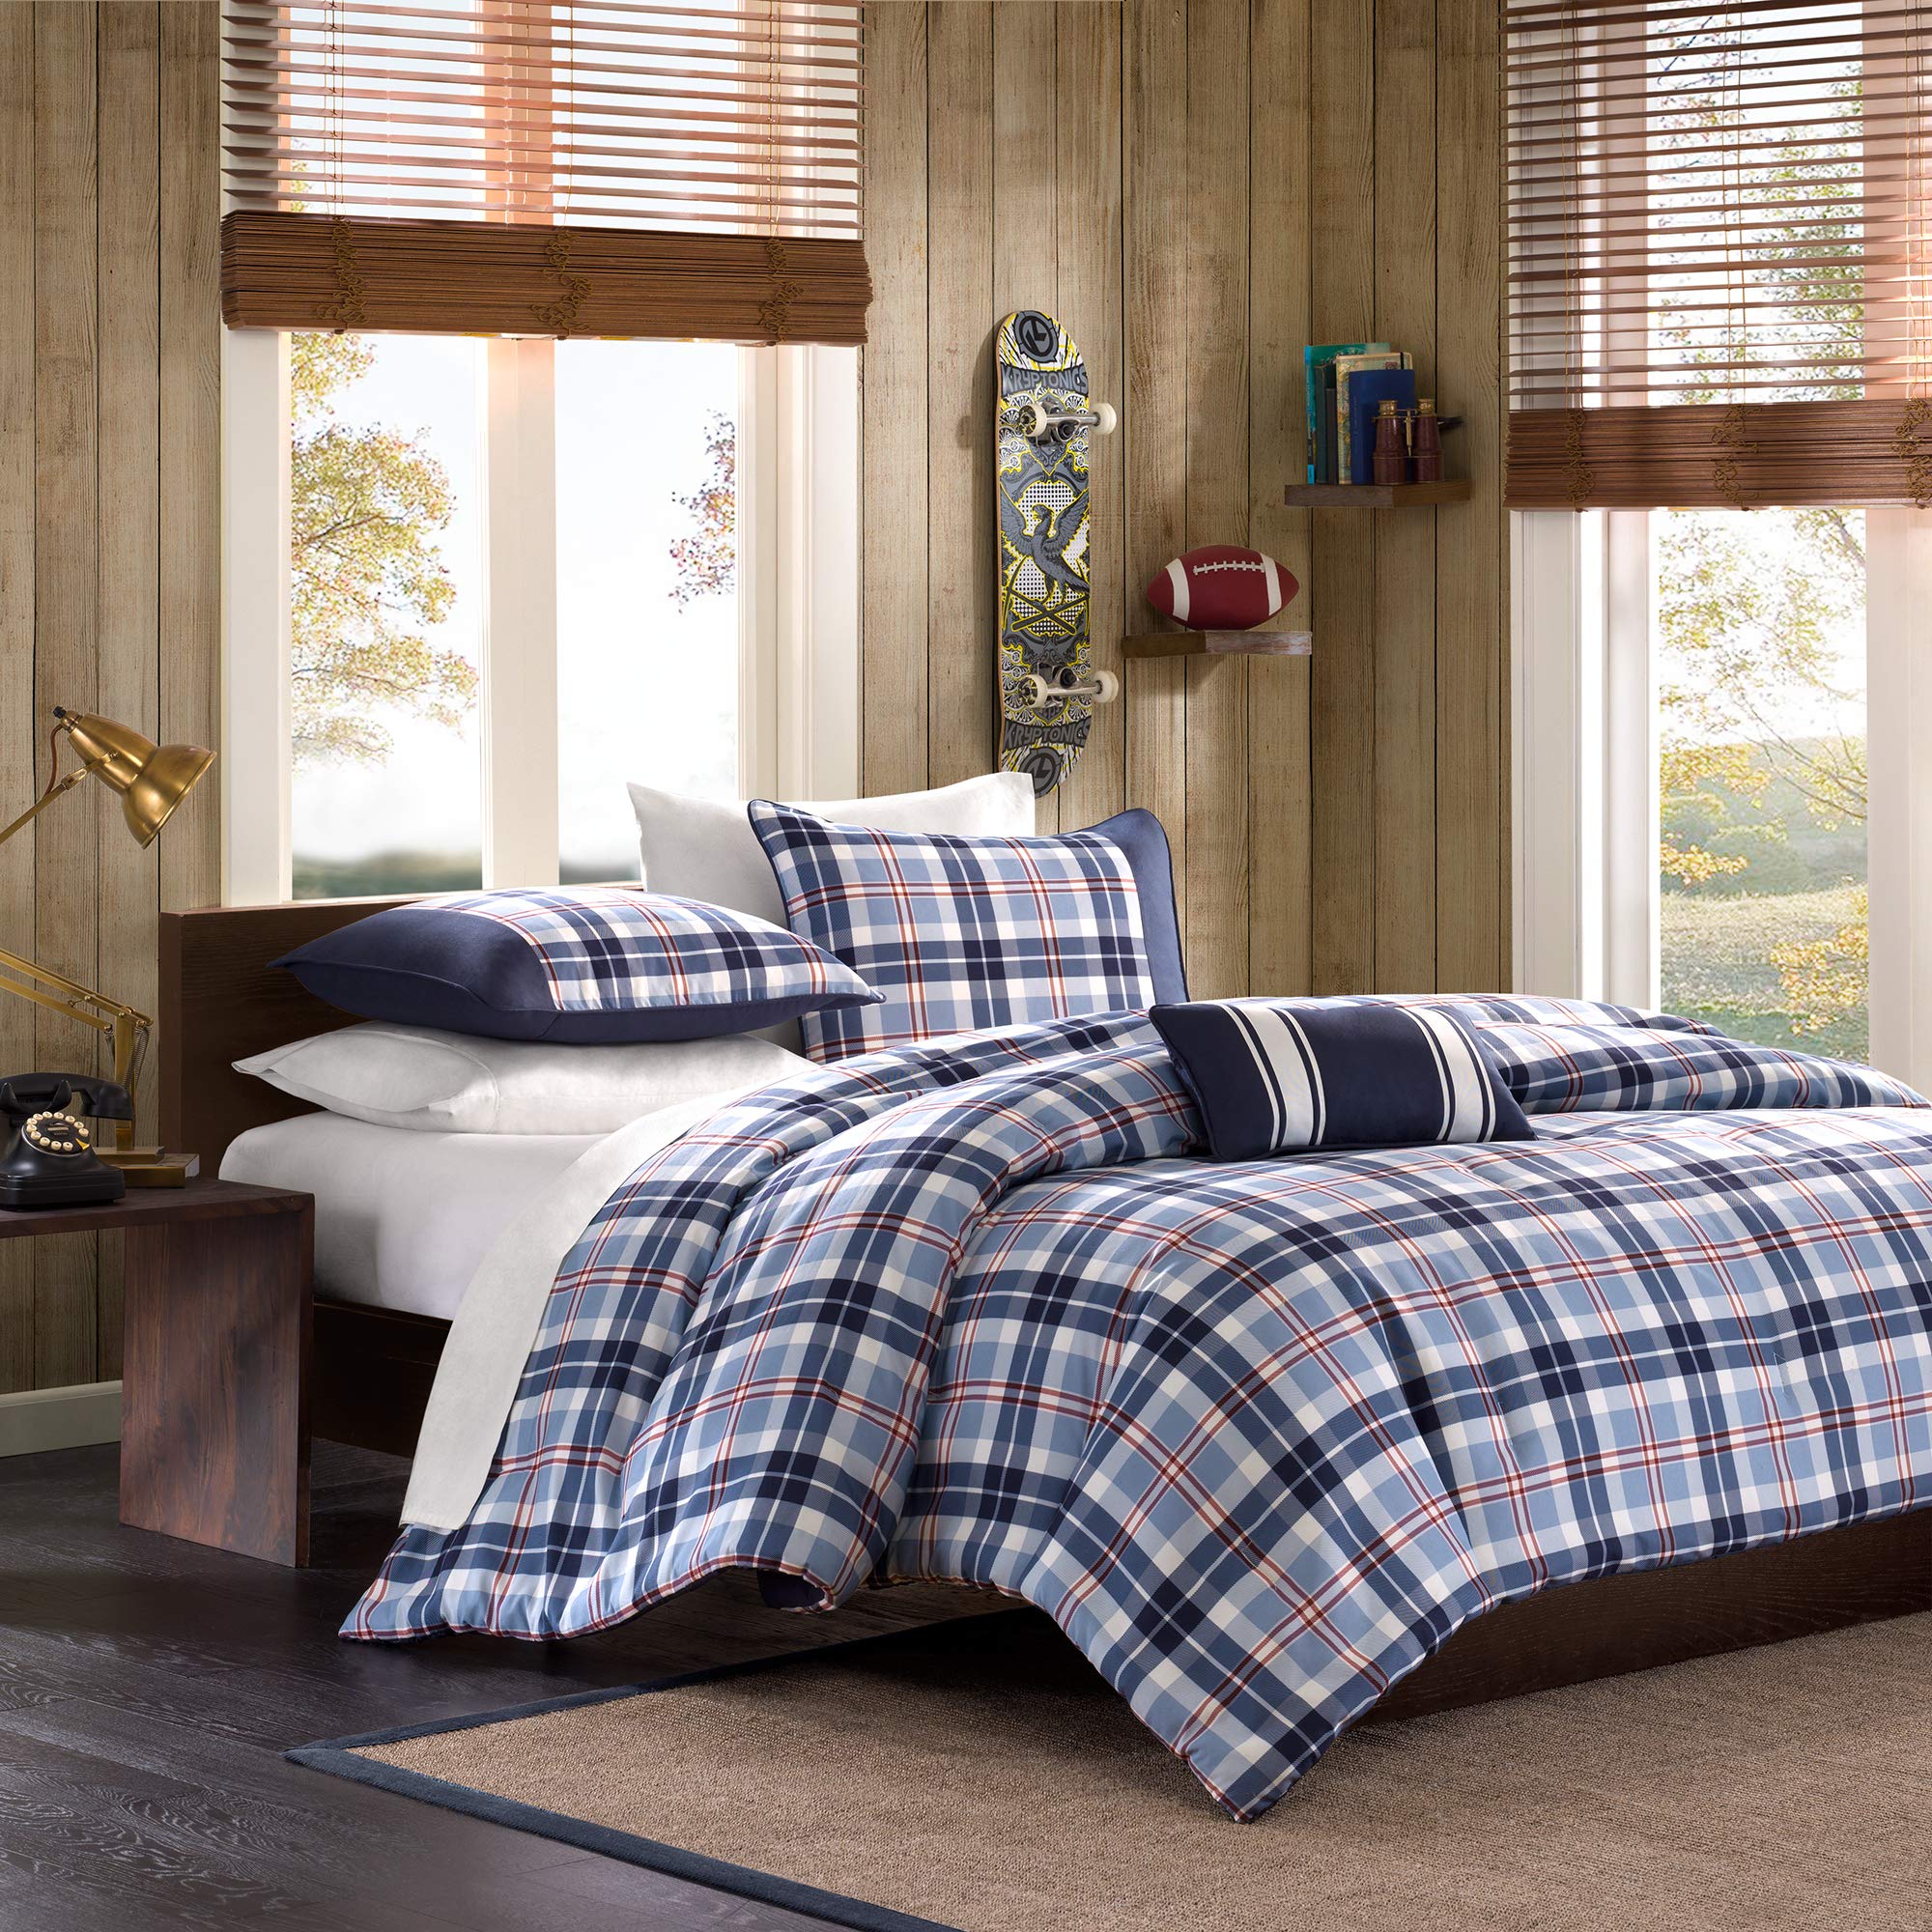 Book Cover Mi Zone Cozy Comforter Set Cabin Lifestyle Plaid Design All Season Bedding Matching Shams, Decorative Pillow, Full/Queen, Elliot Blue 4 Piece